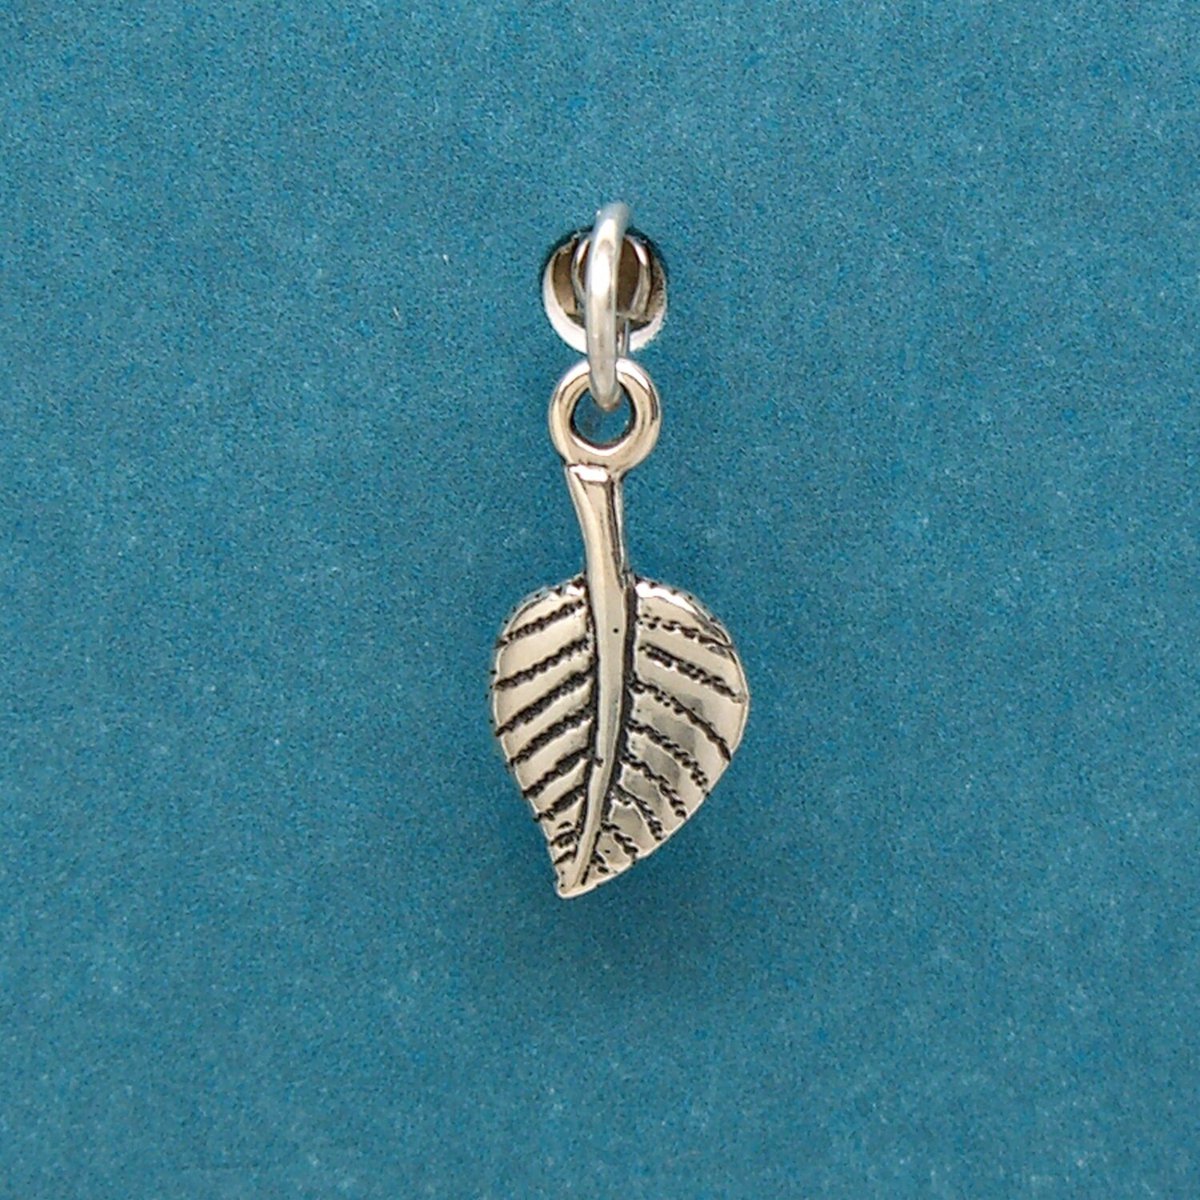 Aspen Tree Leaf Sterling Silver Mini Charm for Bracelet or Anklet 1720 #NecklacePendant #SterlingSilver 
$10.65
➤ grassshacktrading.etsy.com/listing/168700…